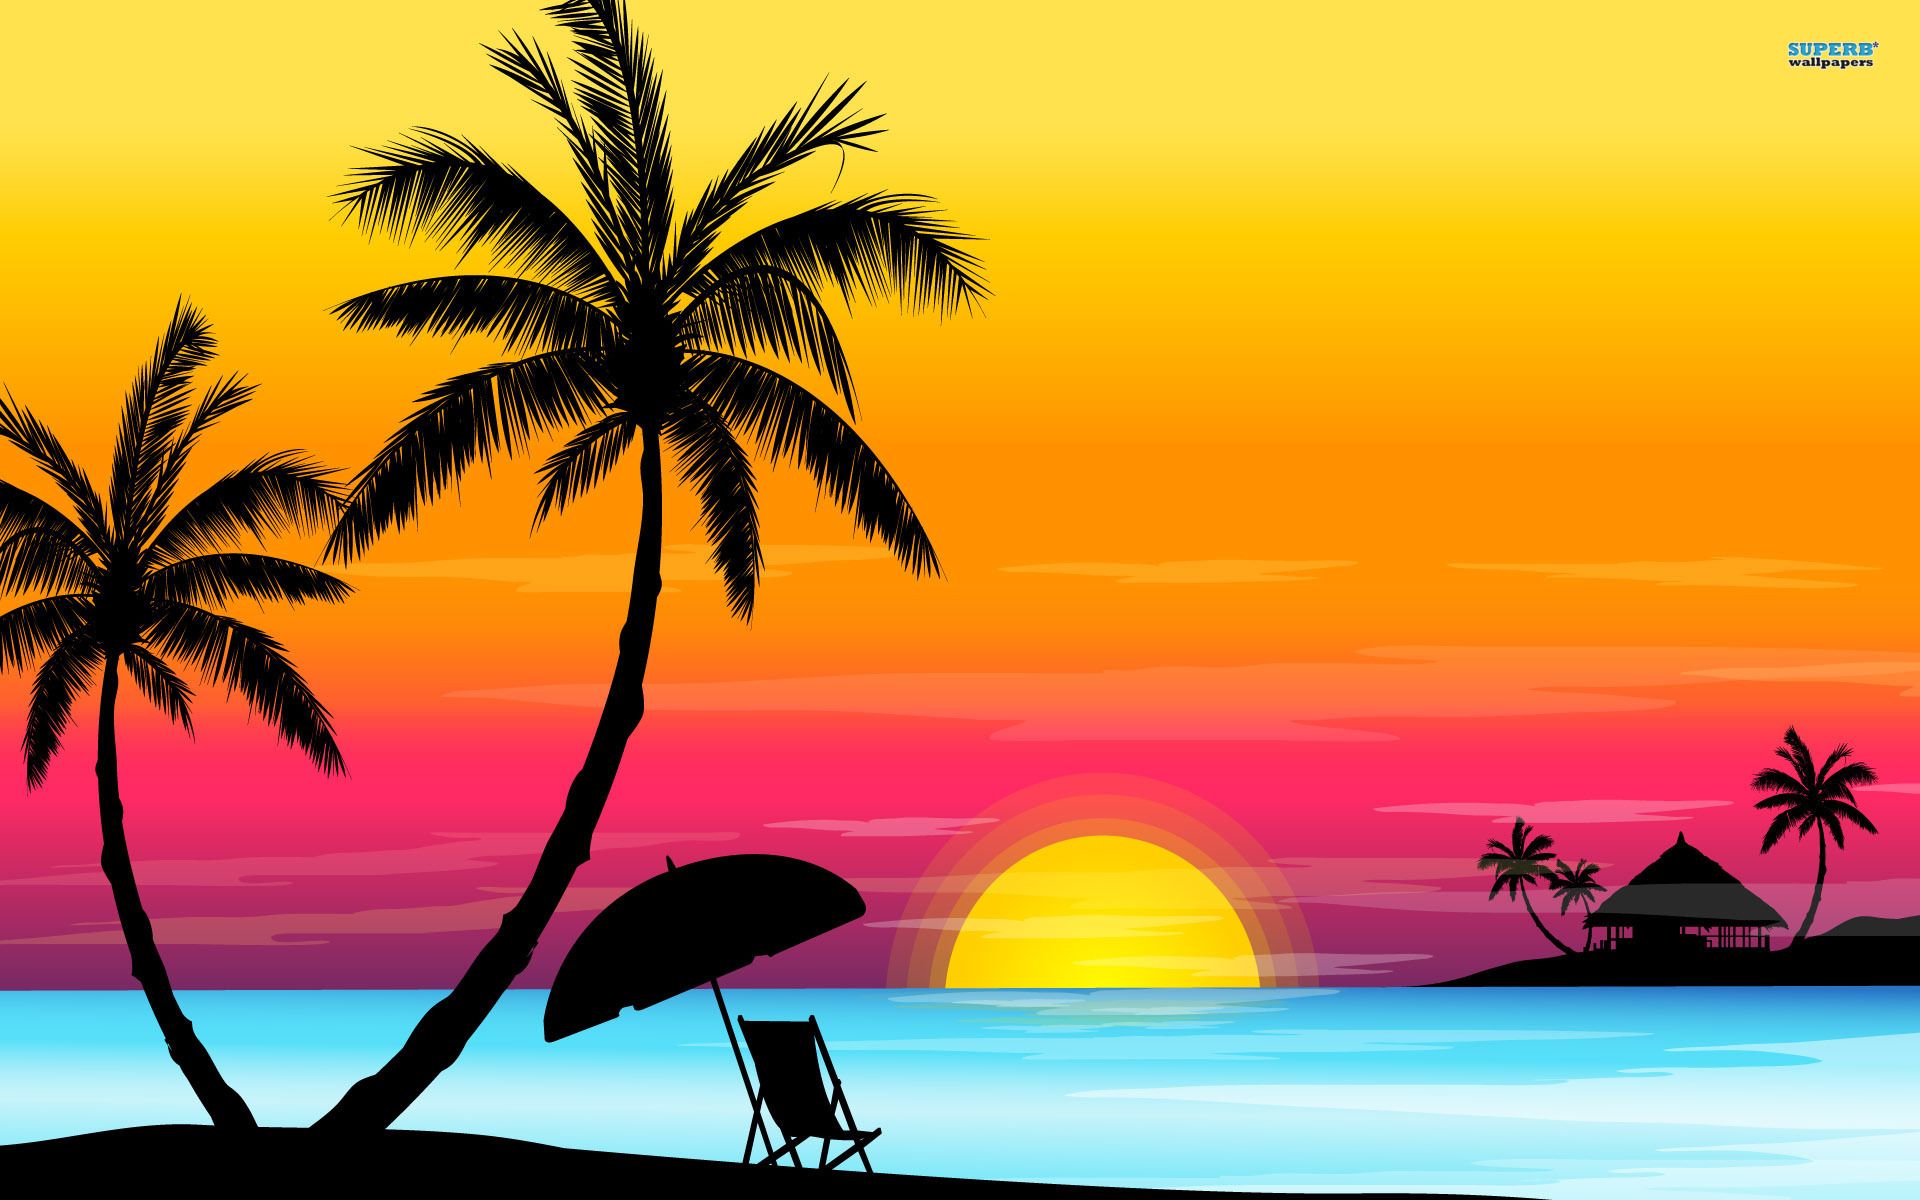 Sunset Beach Background Clipart.